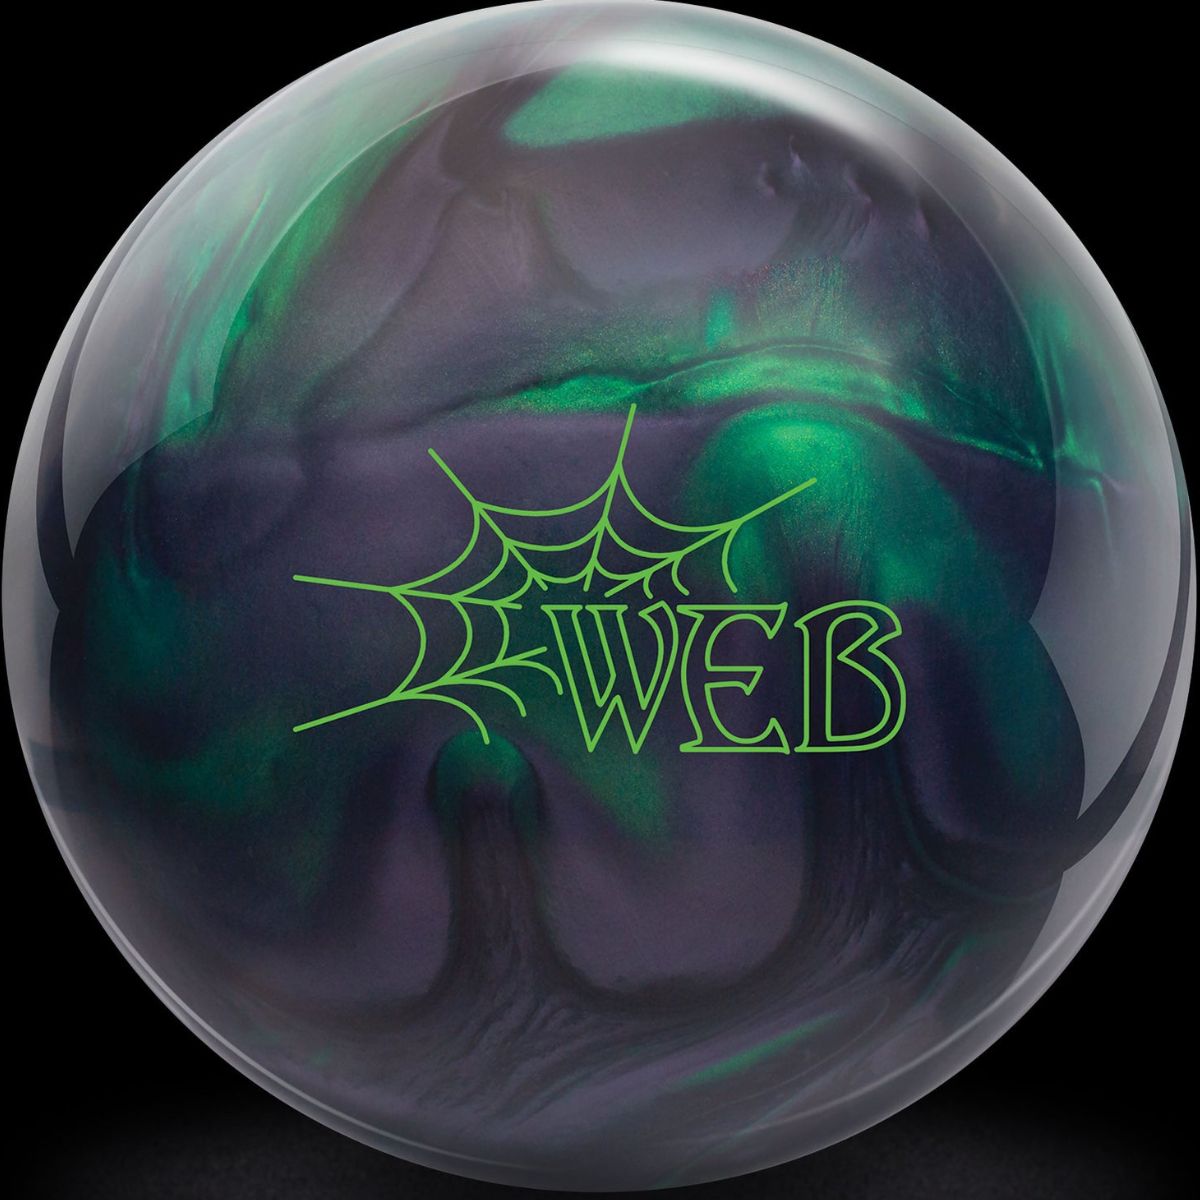 Hammer web pearl bowling ball image.